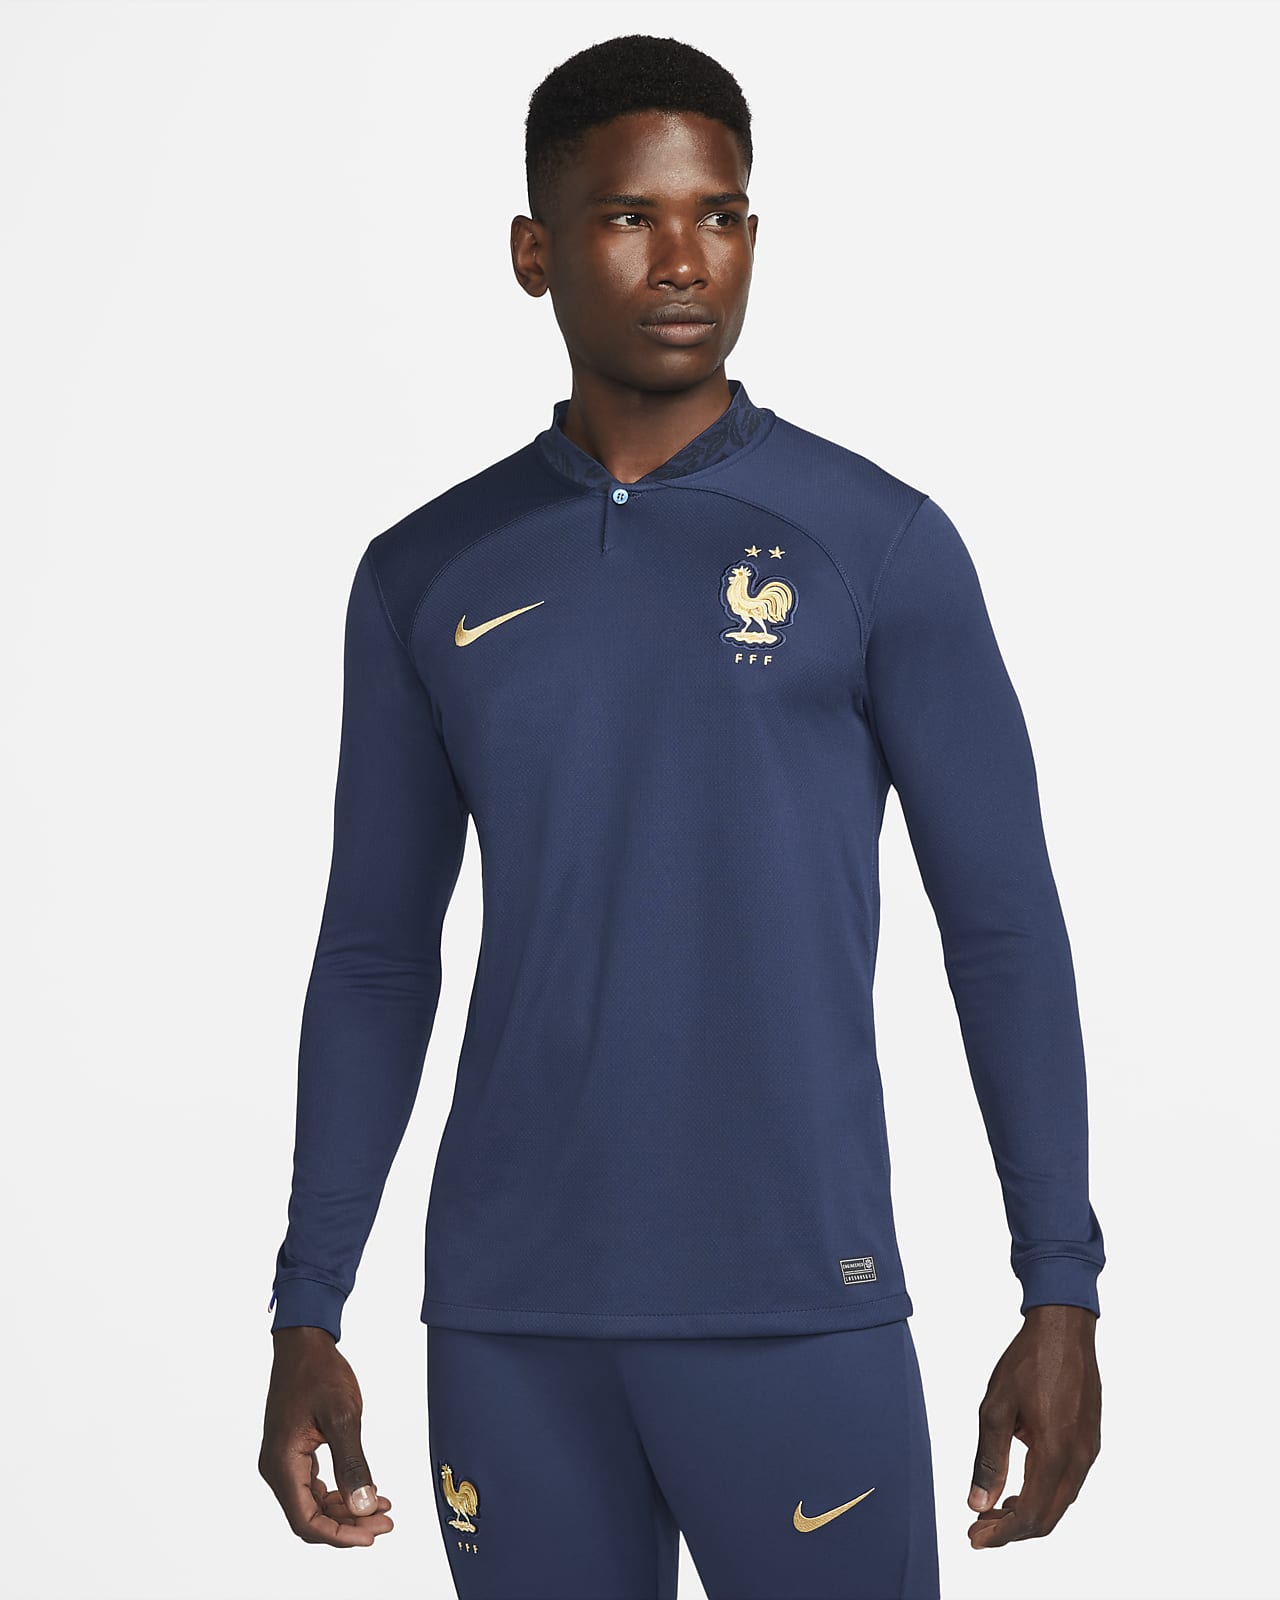 FFF 2022/23 Stadium Home Men's Nike Dri-FIT Long-Sleeve Football Shirt